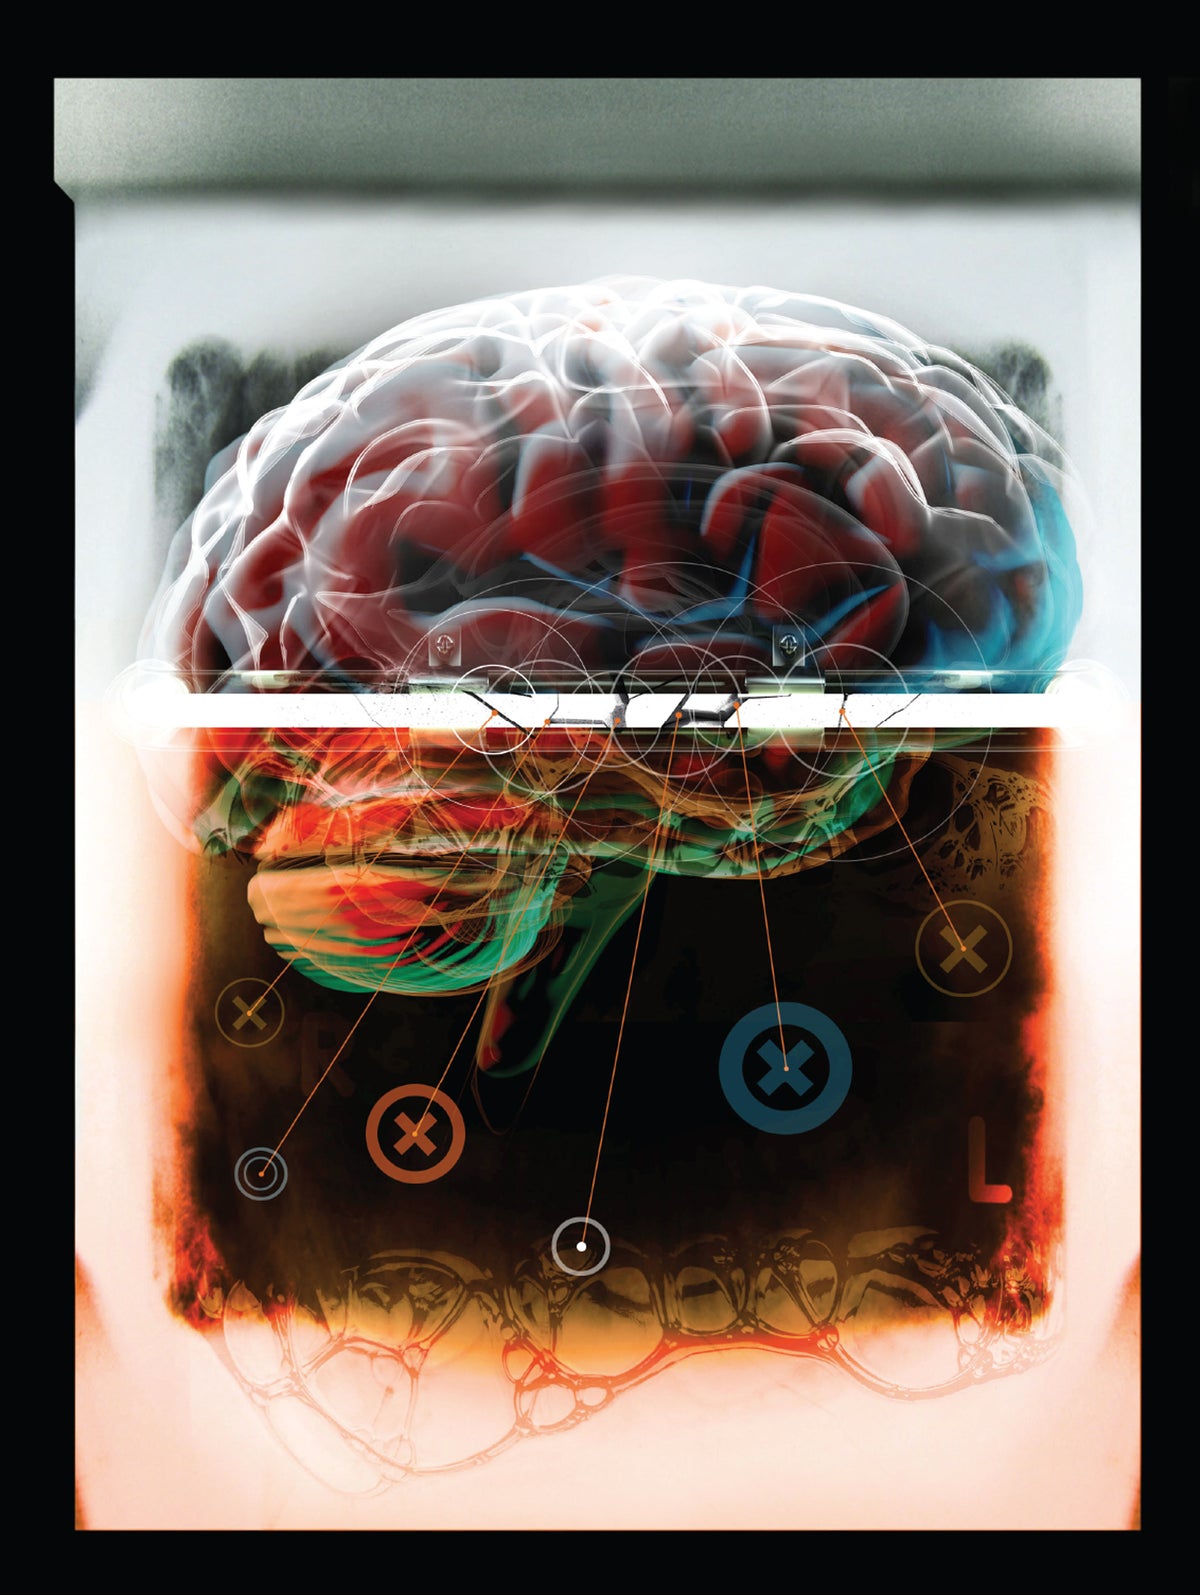 Brain Sciences  December 2021 - Browse Articles